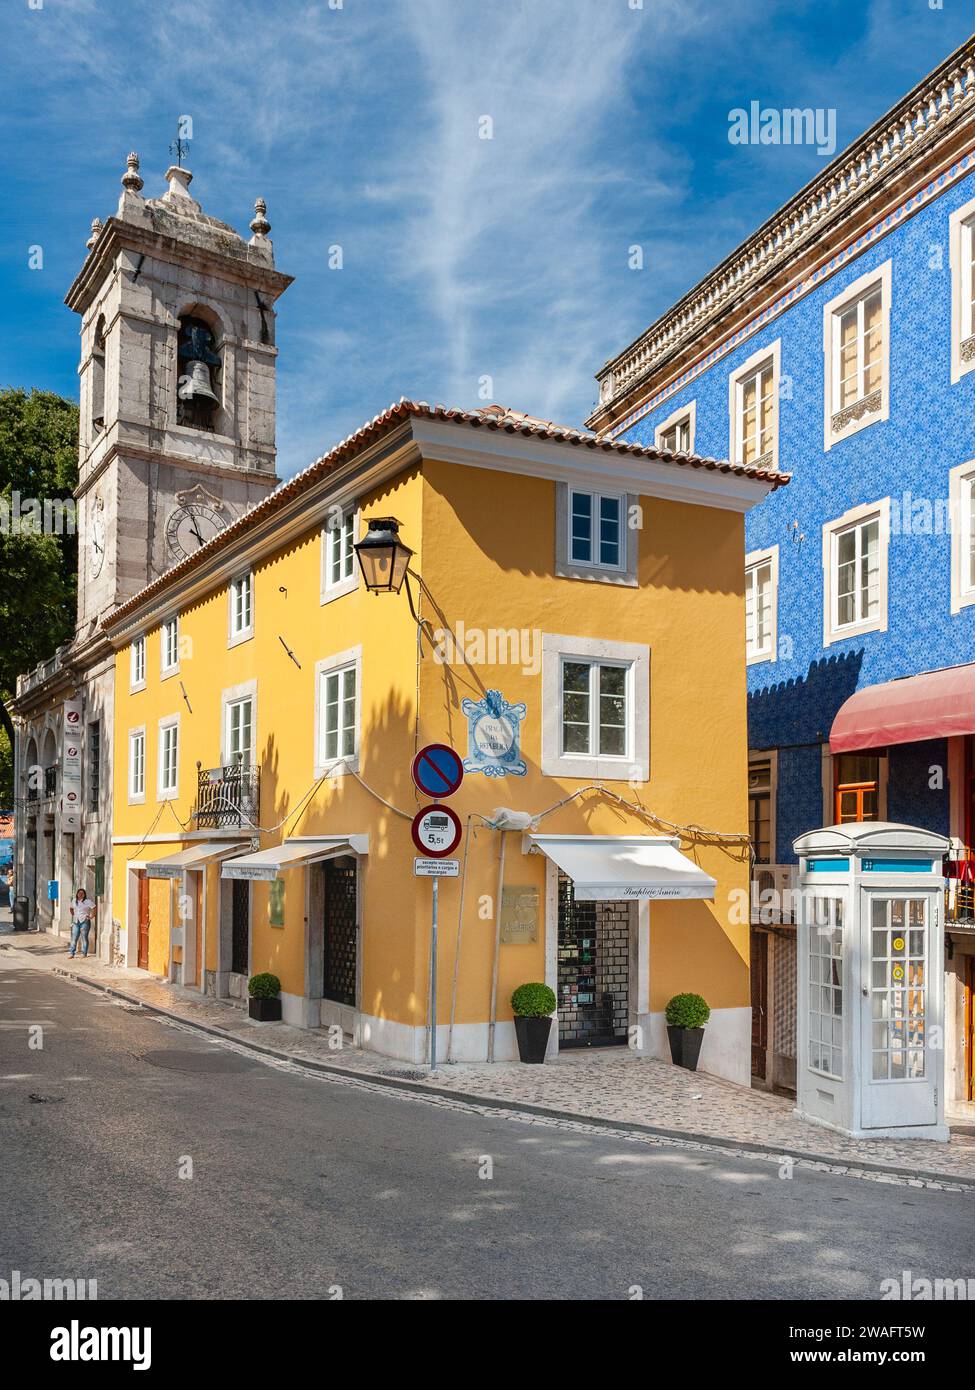 Praca da Republica in the village of Sintra in Portugal Stock Photo